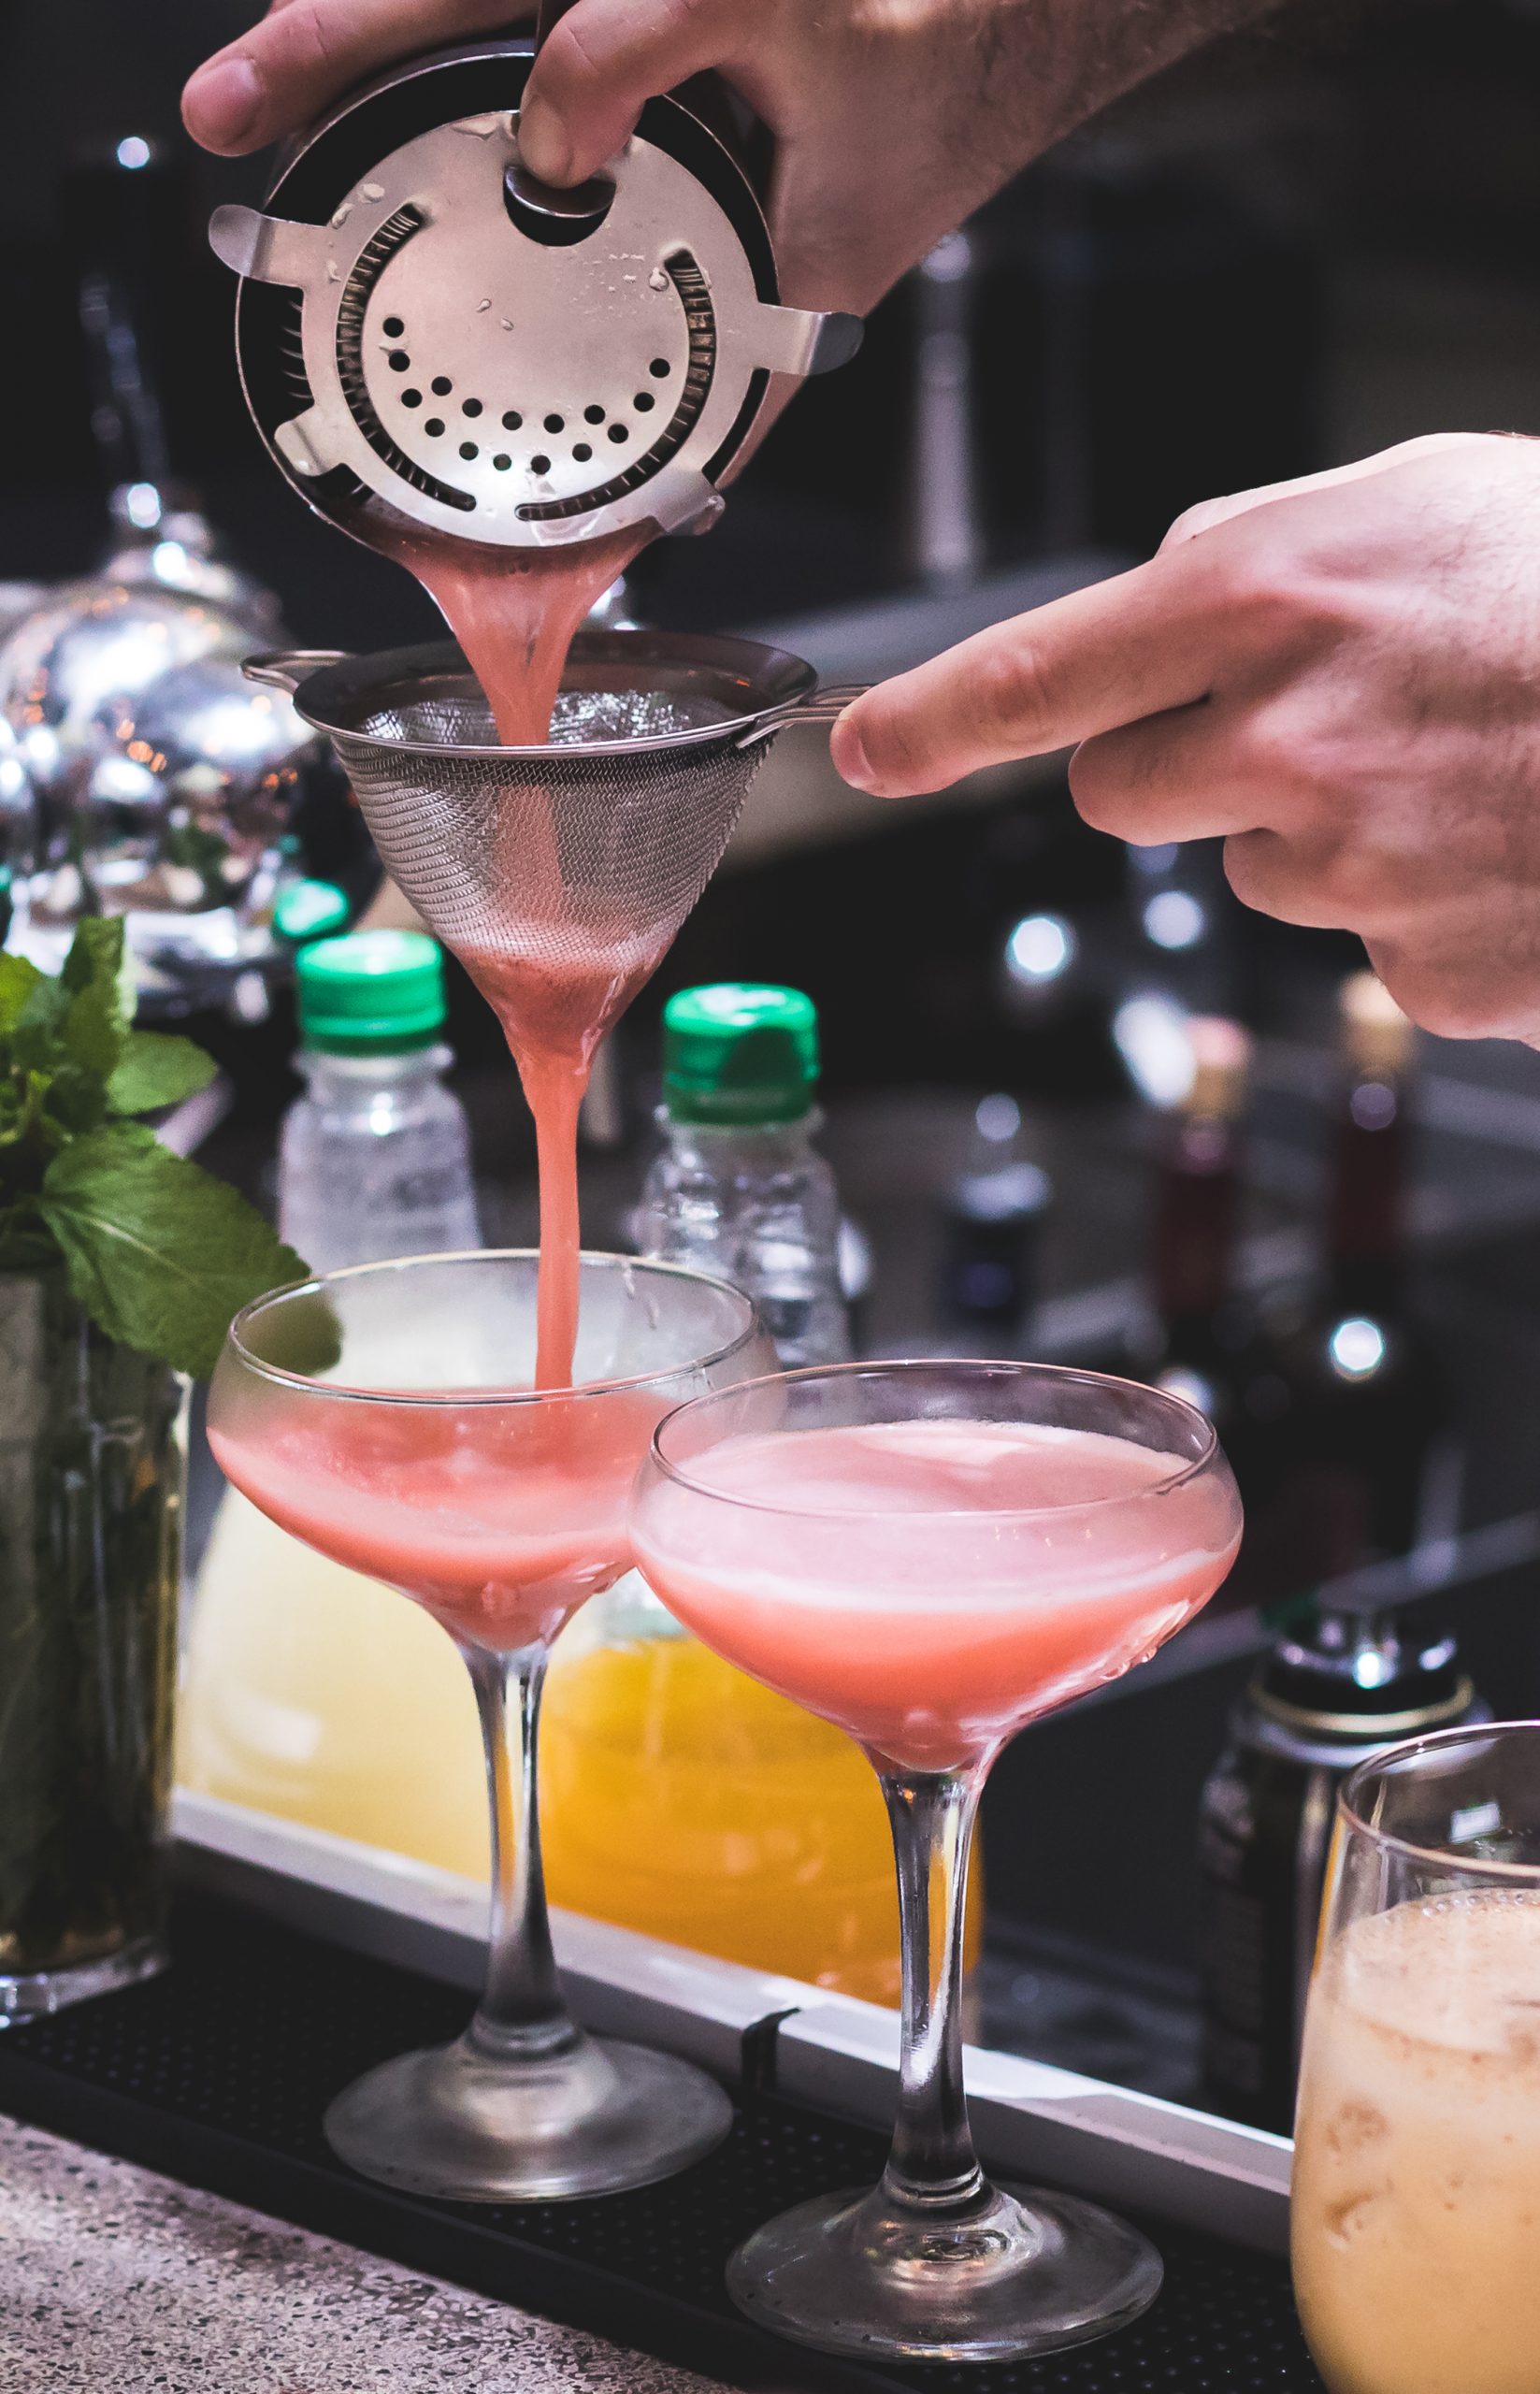 Barman is pouring a pink cocktail via strainer- ברמן מוזג קוקטייל וורוד דרך מסננת לכוס